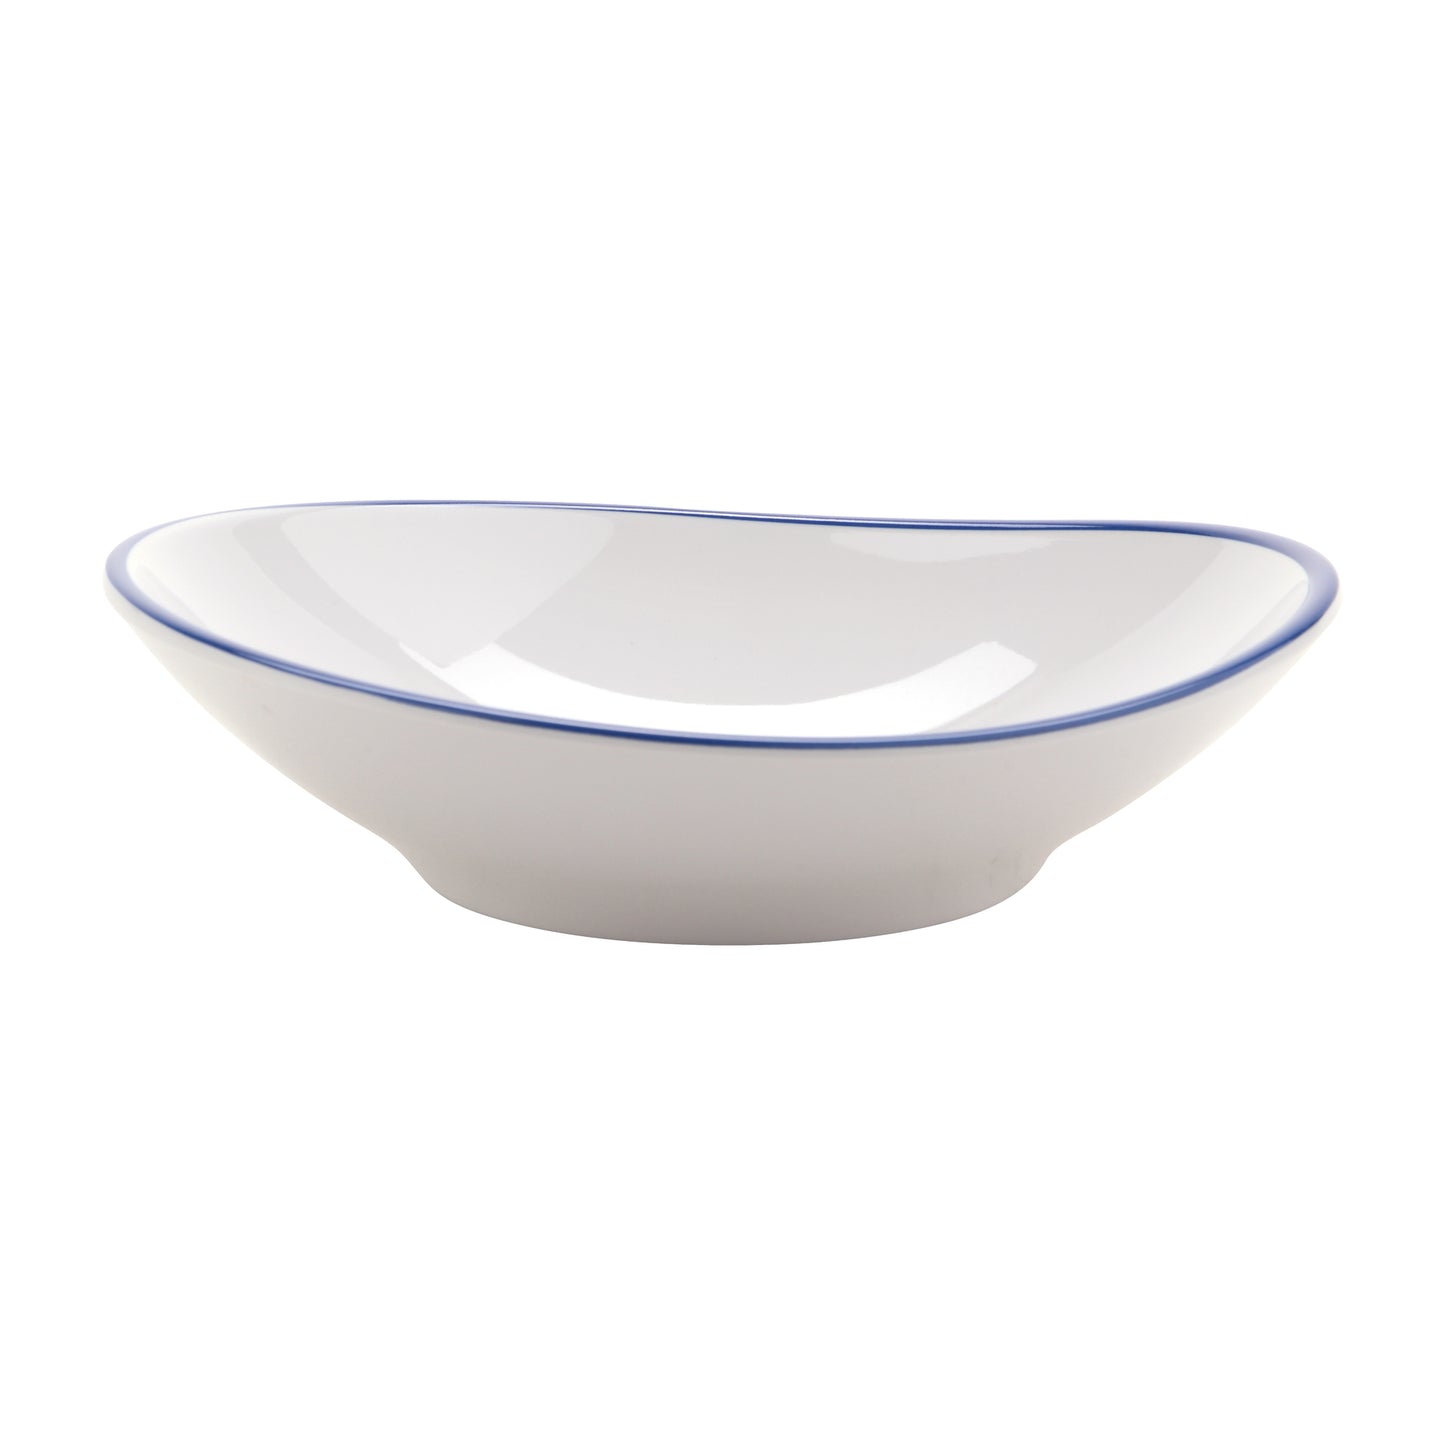 10 oz. White with Blue Trim, Enamelware Melamine Shallow Bowl, 12 oz. rim-full, 7" x 6.75", 1.5" deep, G.E.T. Settlement Bistro (12 Pack)